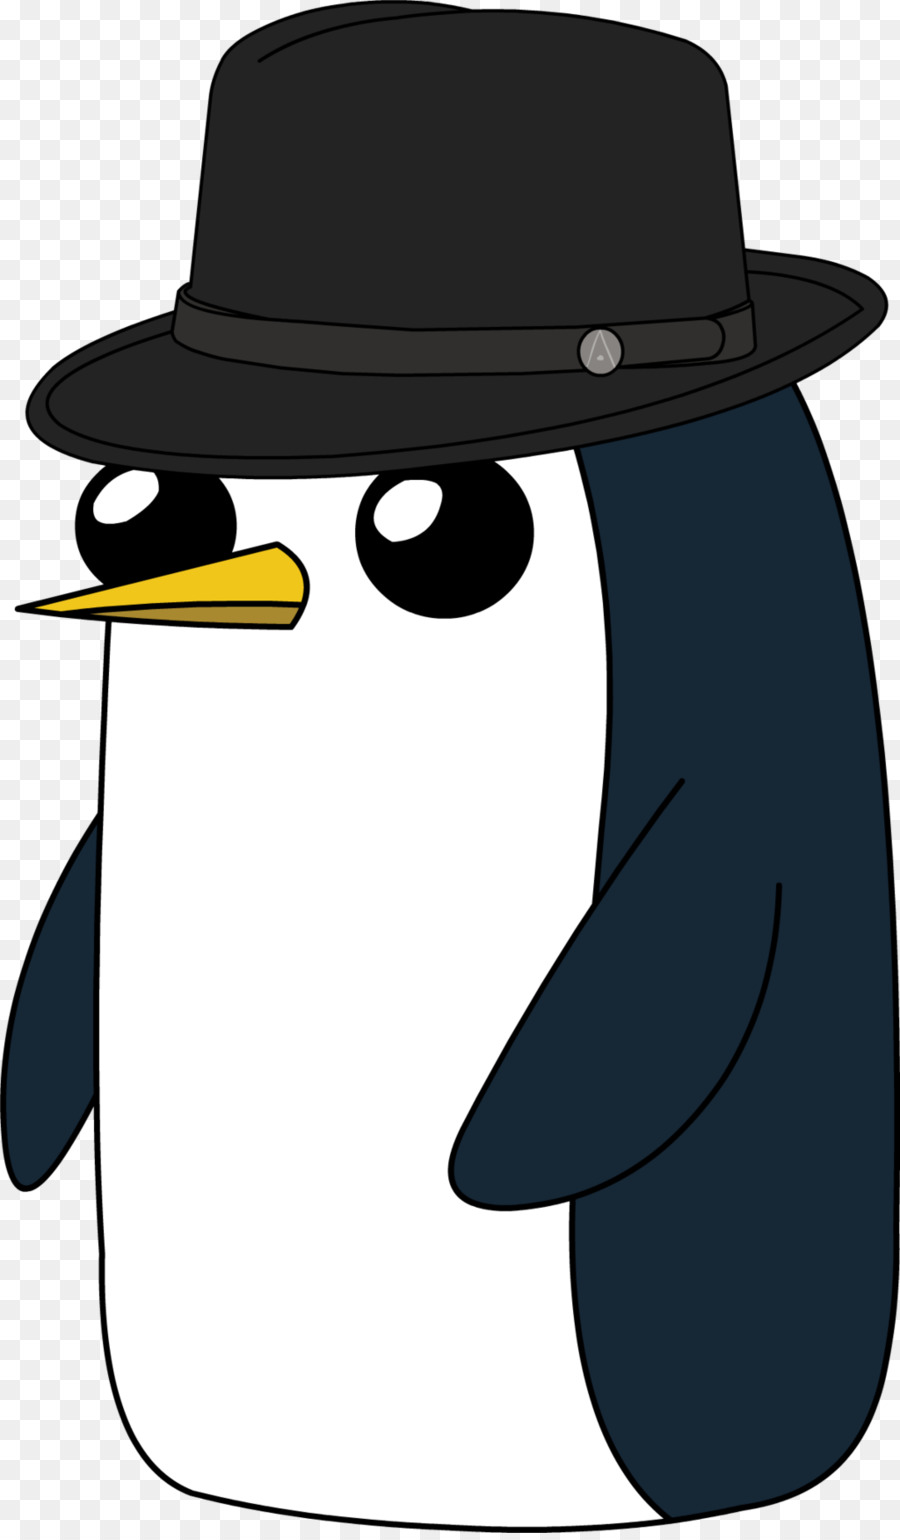 Pinguino uccello DeviantArt - Pinguino